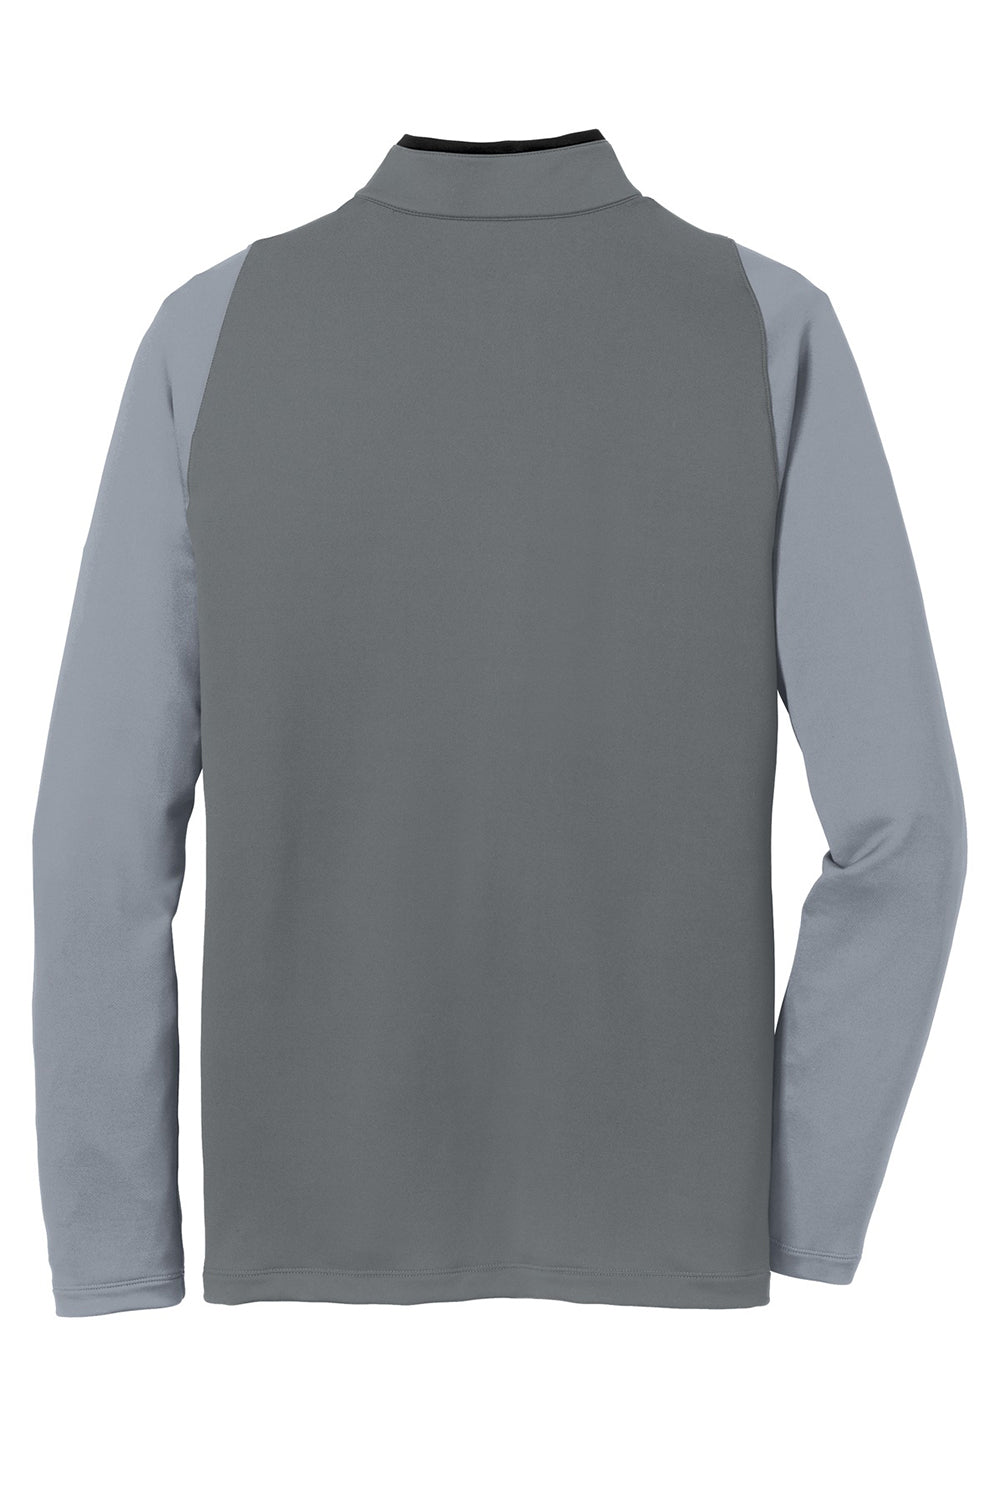 Nike 779795 Mens Dri-Fit Moisture Wicking 1/4 Zip Sweatshirt Dark Grey/Cool Grey Flat Back